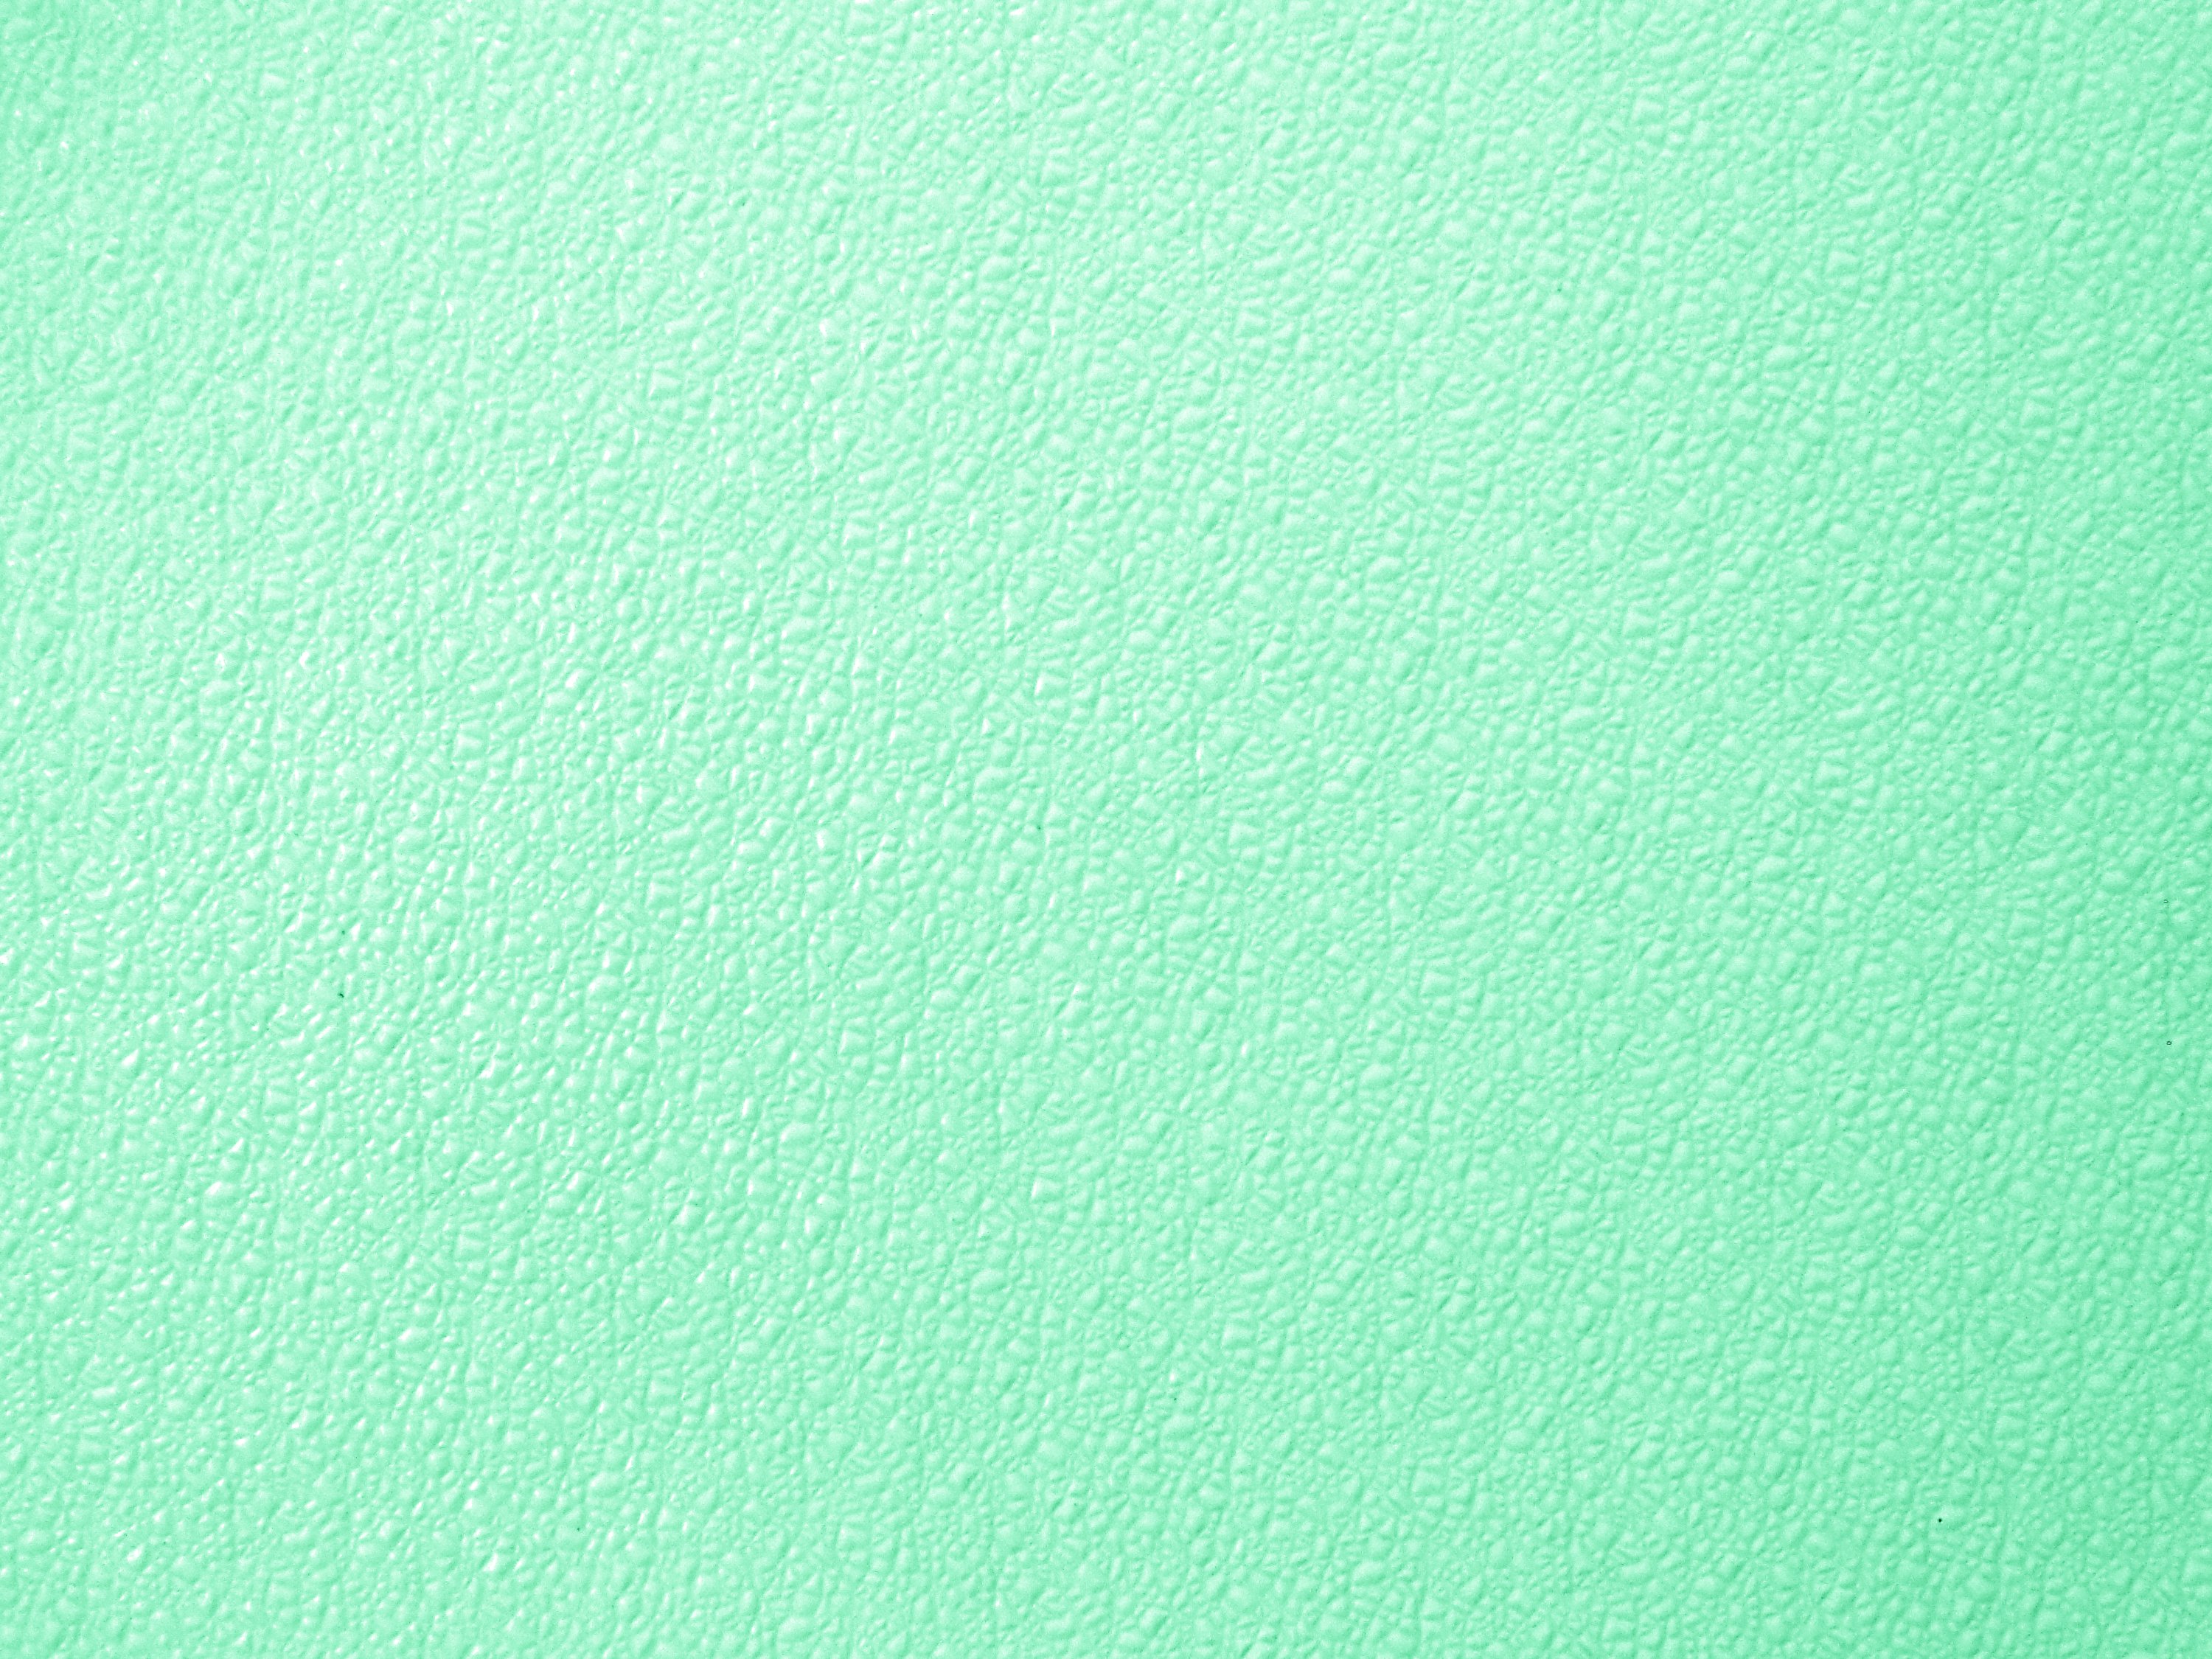 Mint Color Background Bumpy Green Plastic